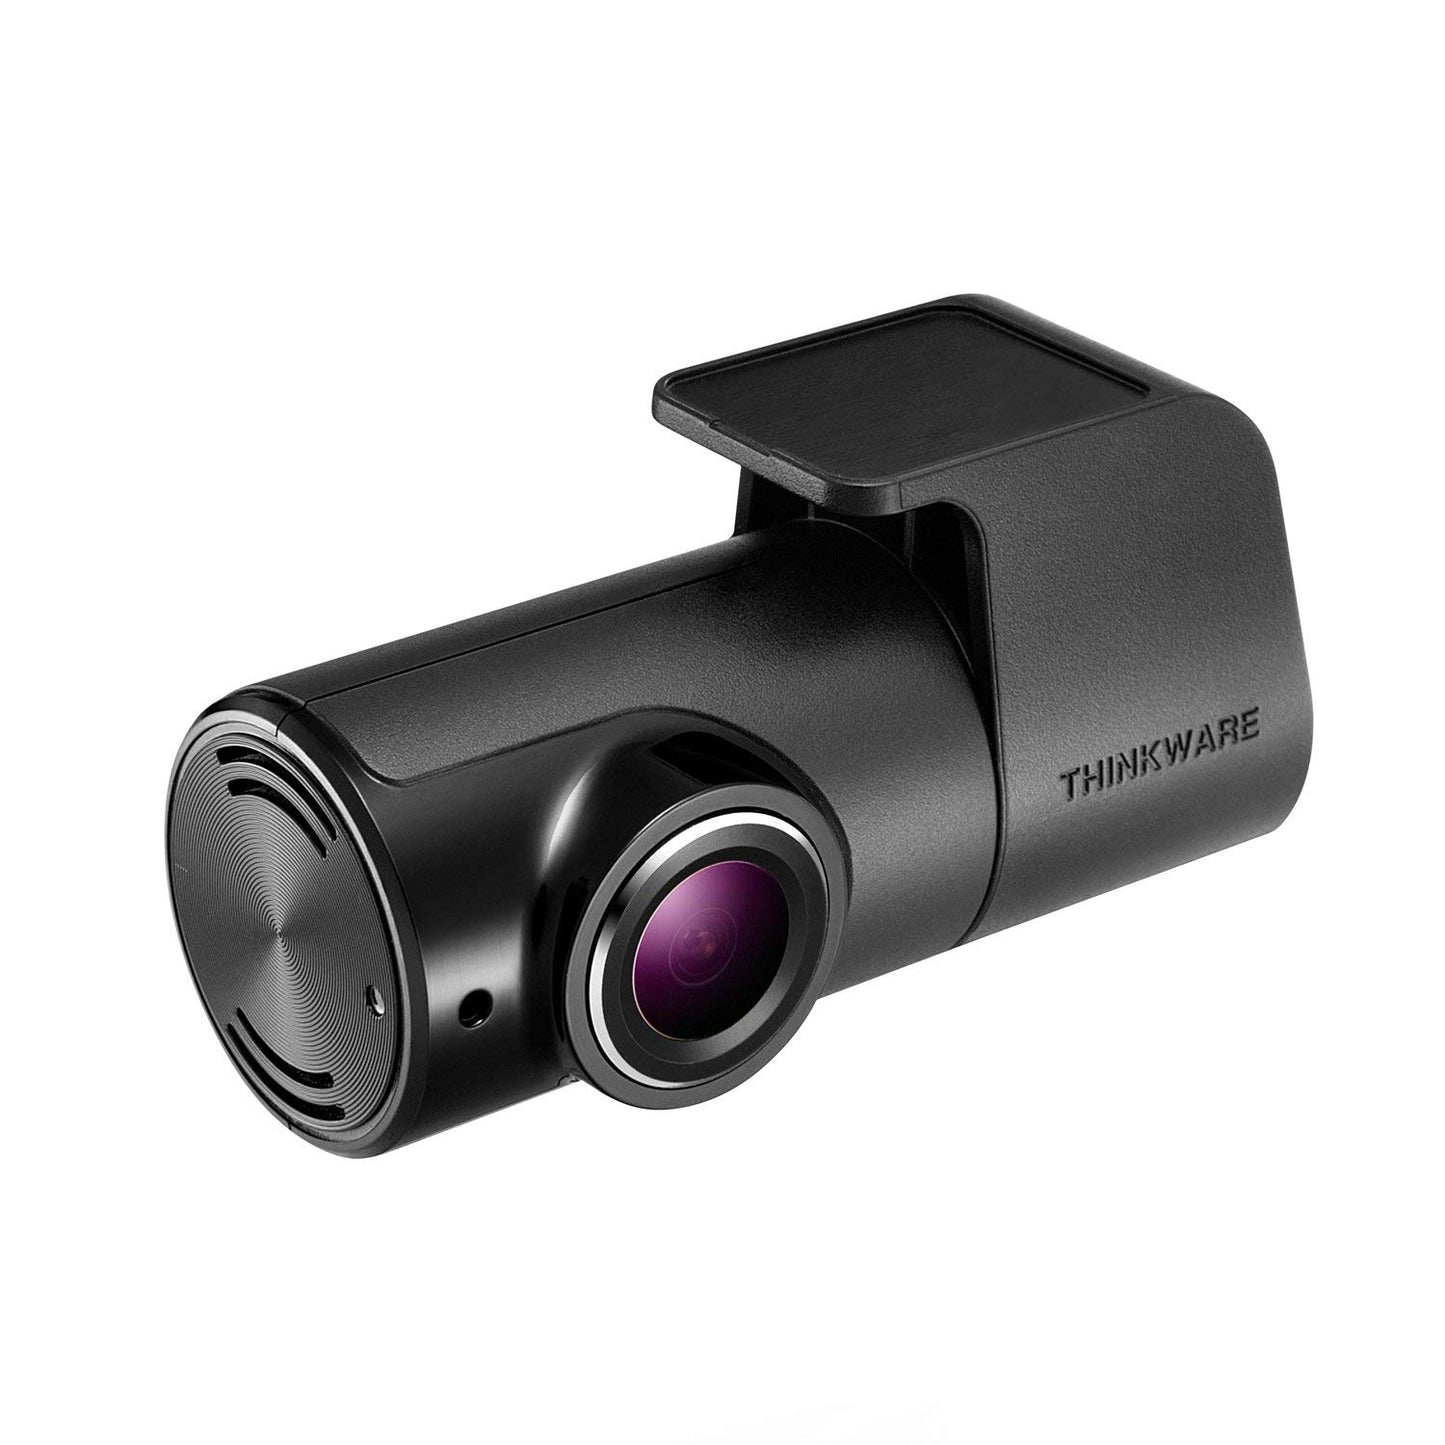 Thinkware Rear camera Full HD 720P video quality for FA200/F200/F100